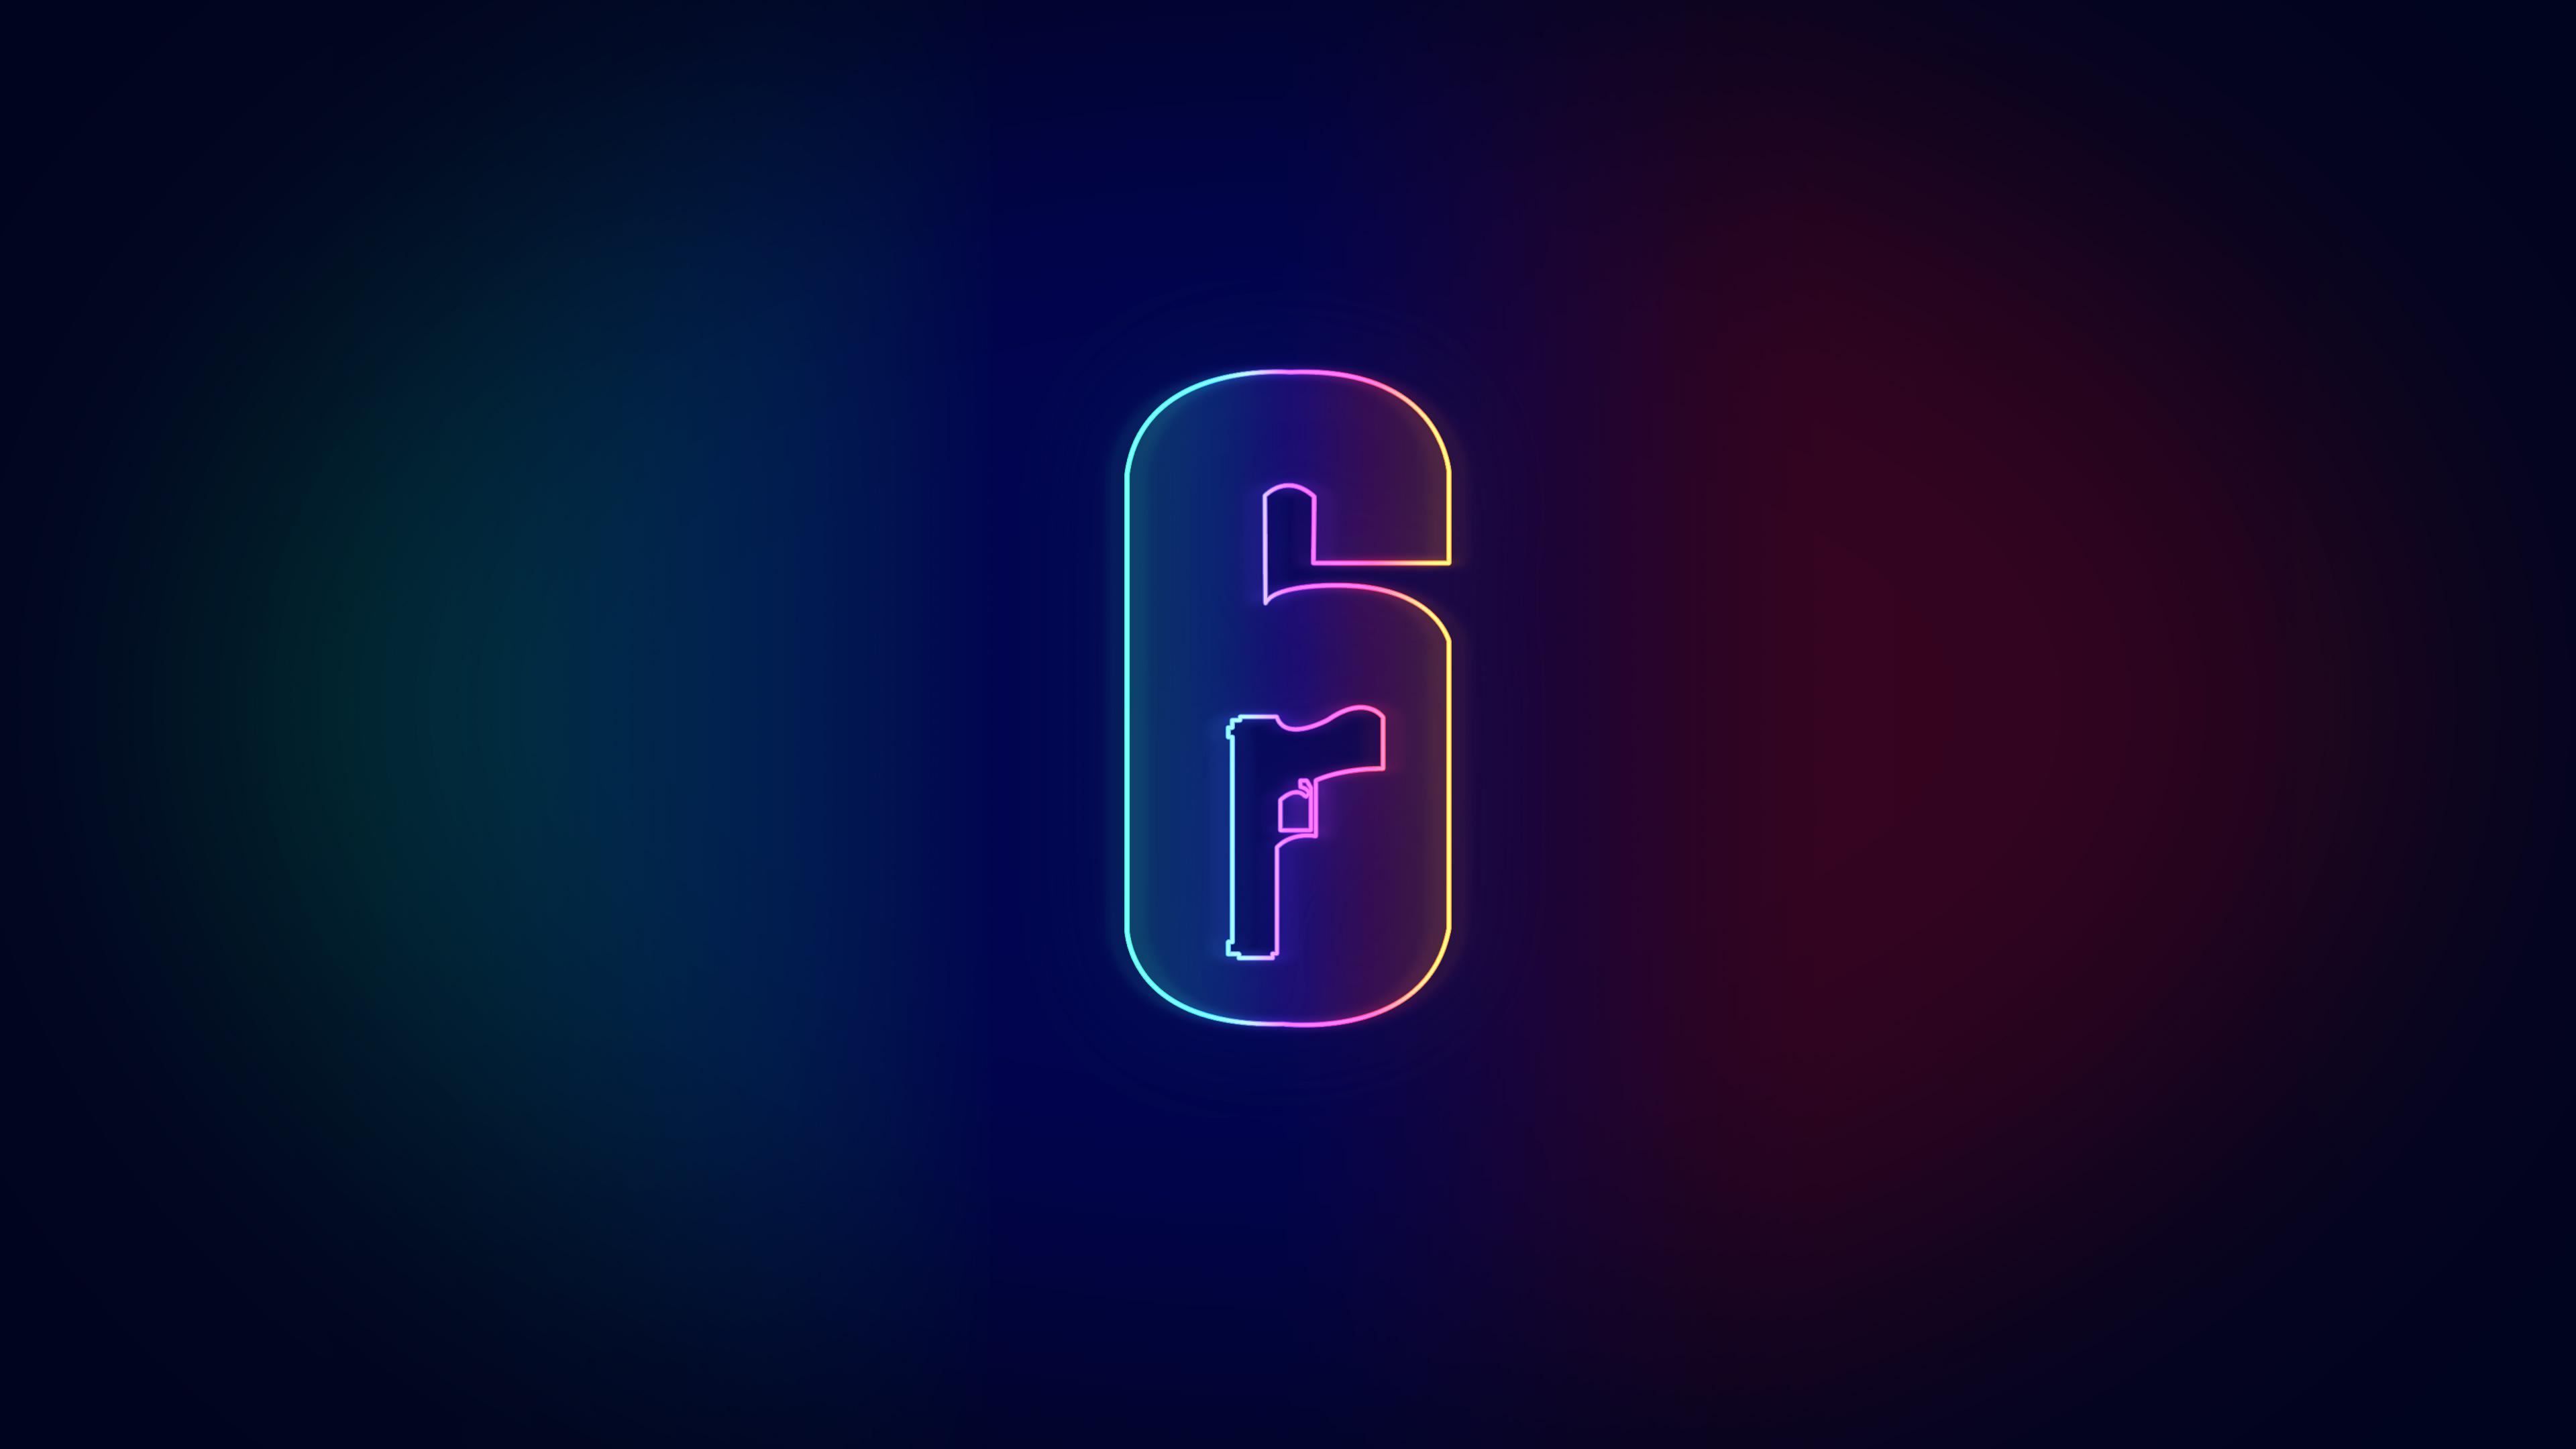 Neon Rainbow 6 Logo wallpaper [3840 x 2160]